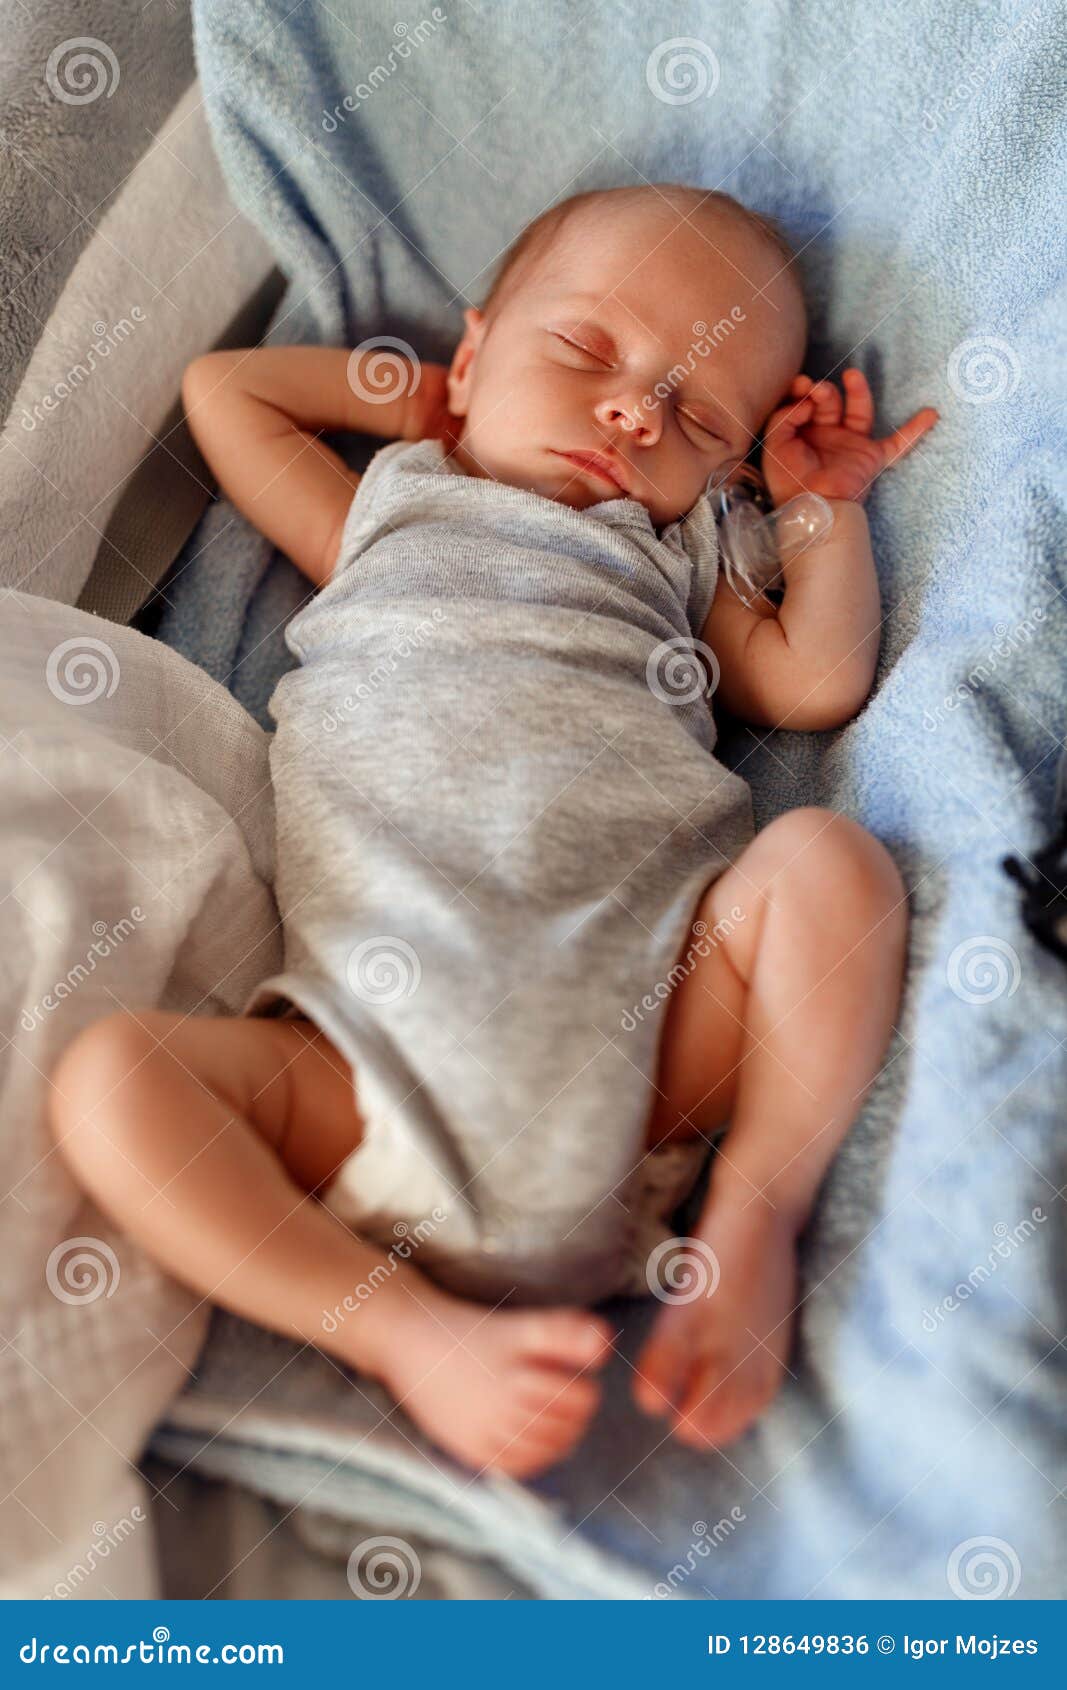 infant sleeping in bouncer